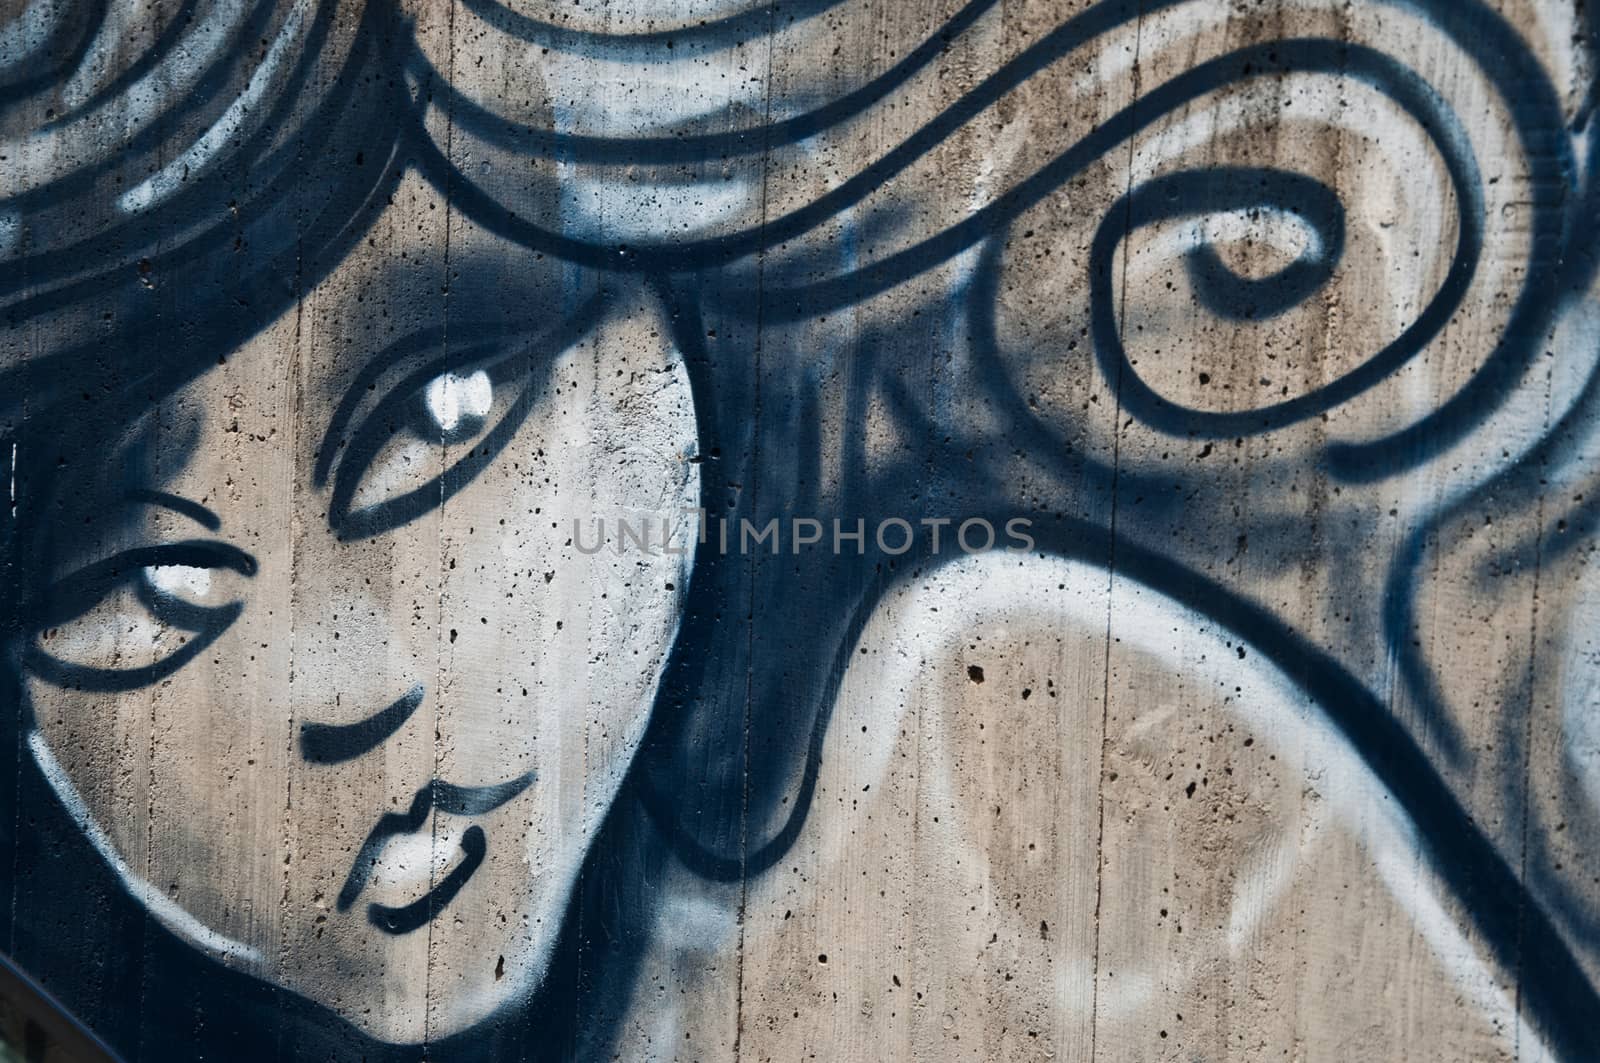 urban art street in paris - woman face